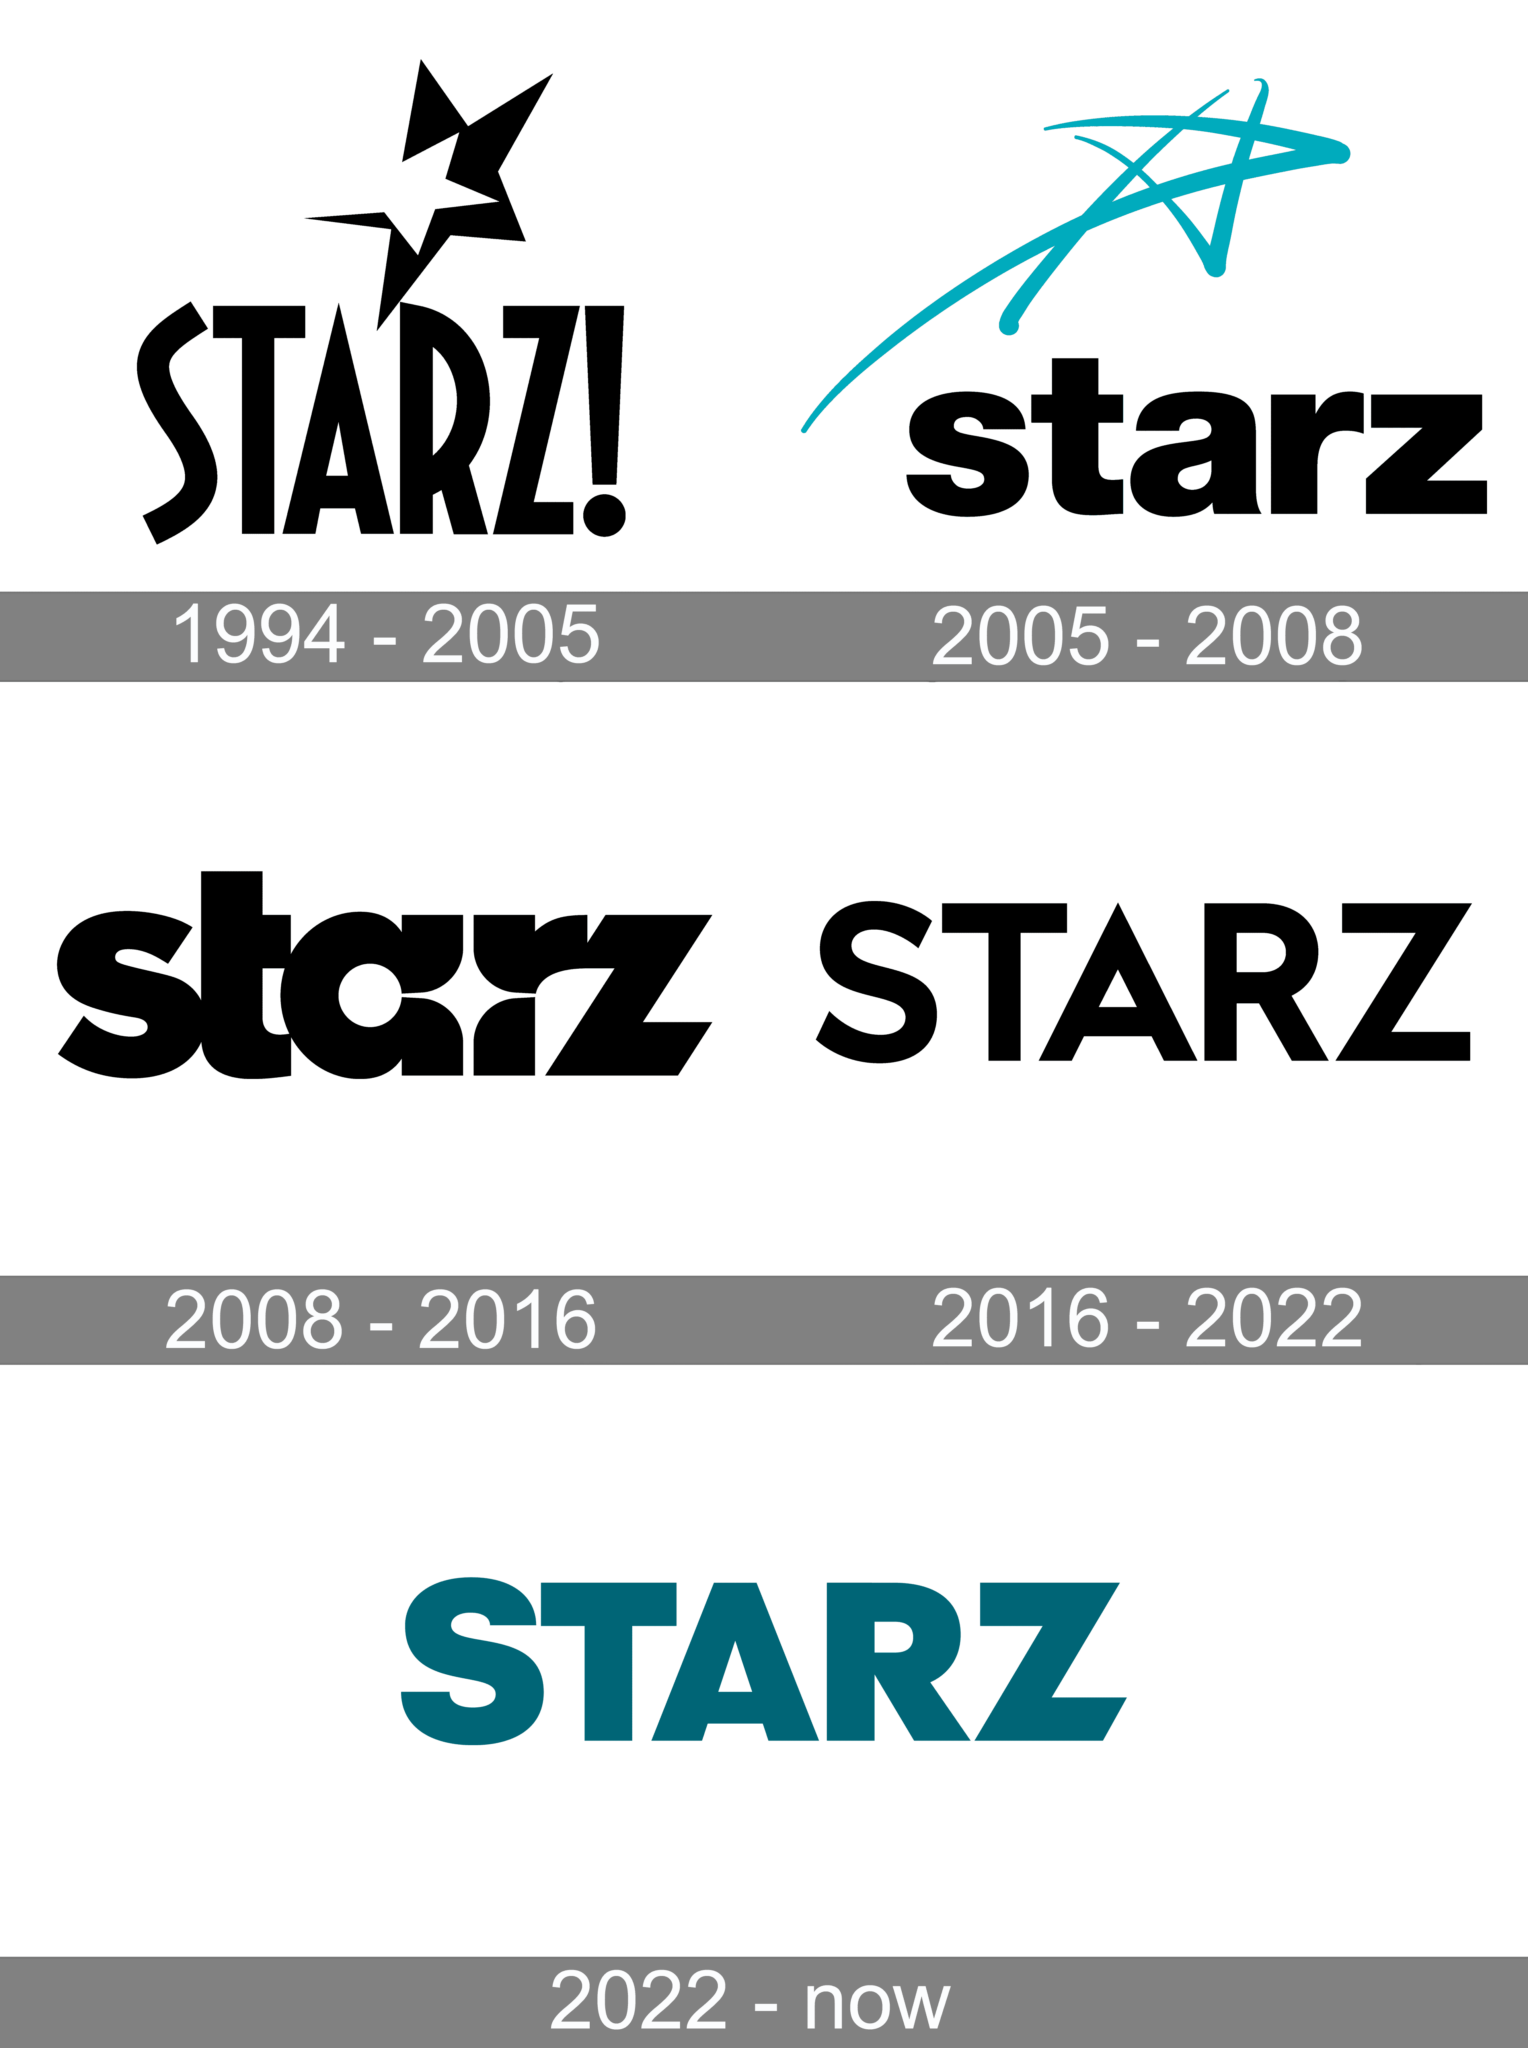 starz feature presentation logo history